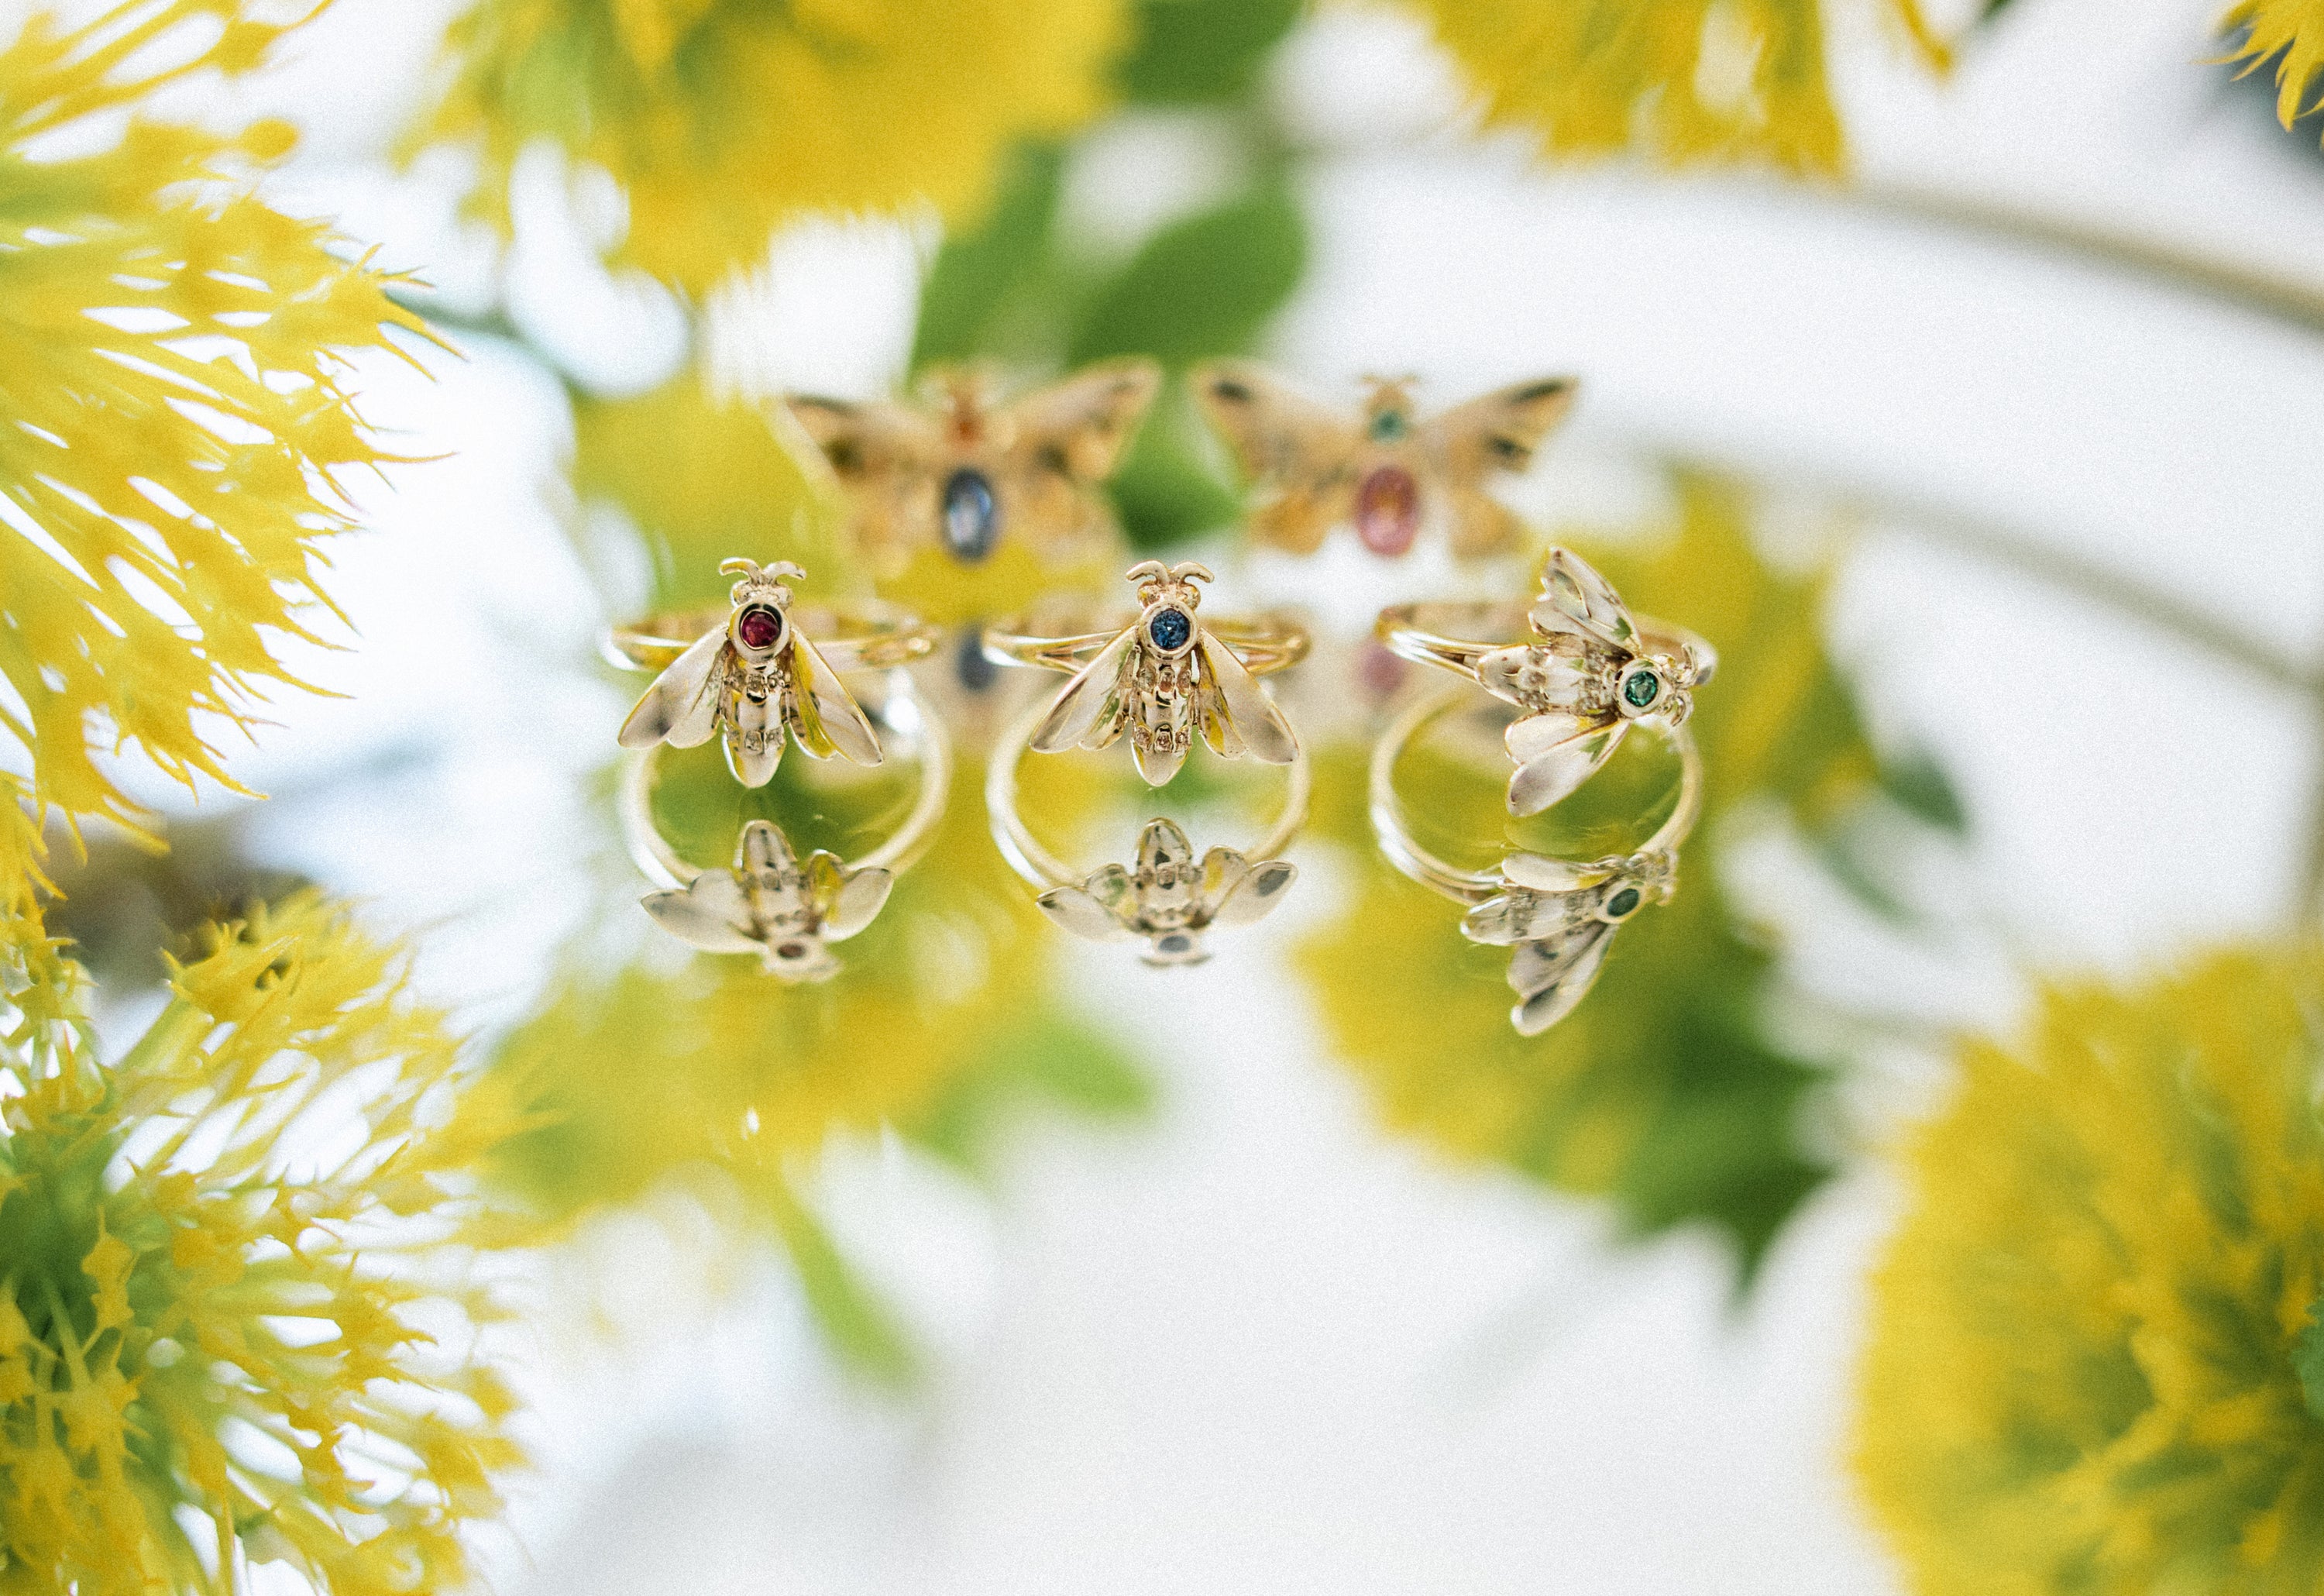 Six bespoke handmade rings by independent jeweller Jessica Steele